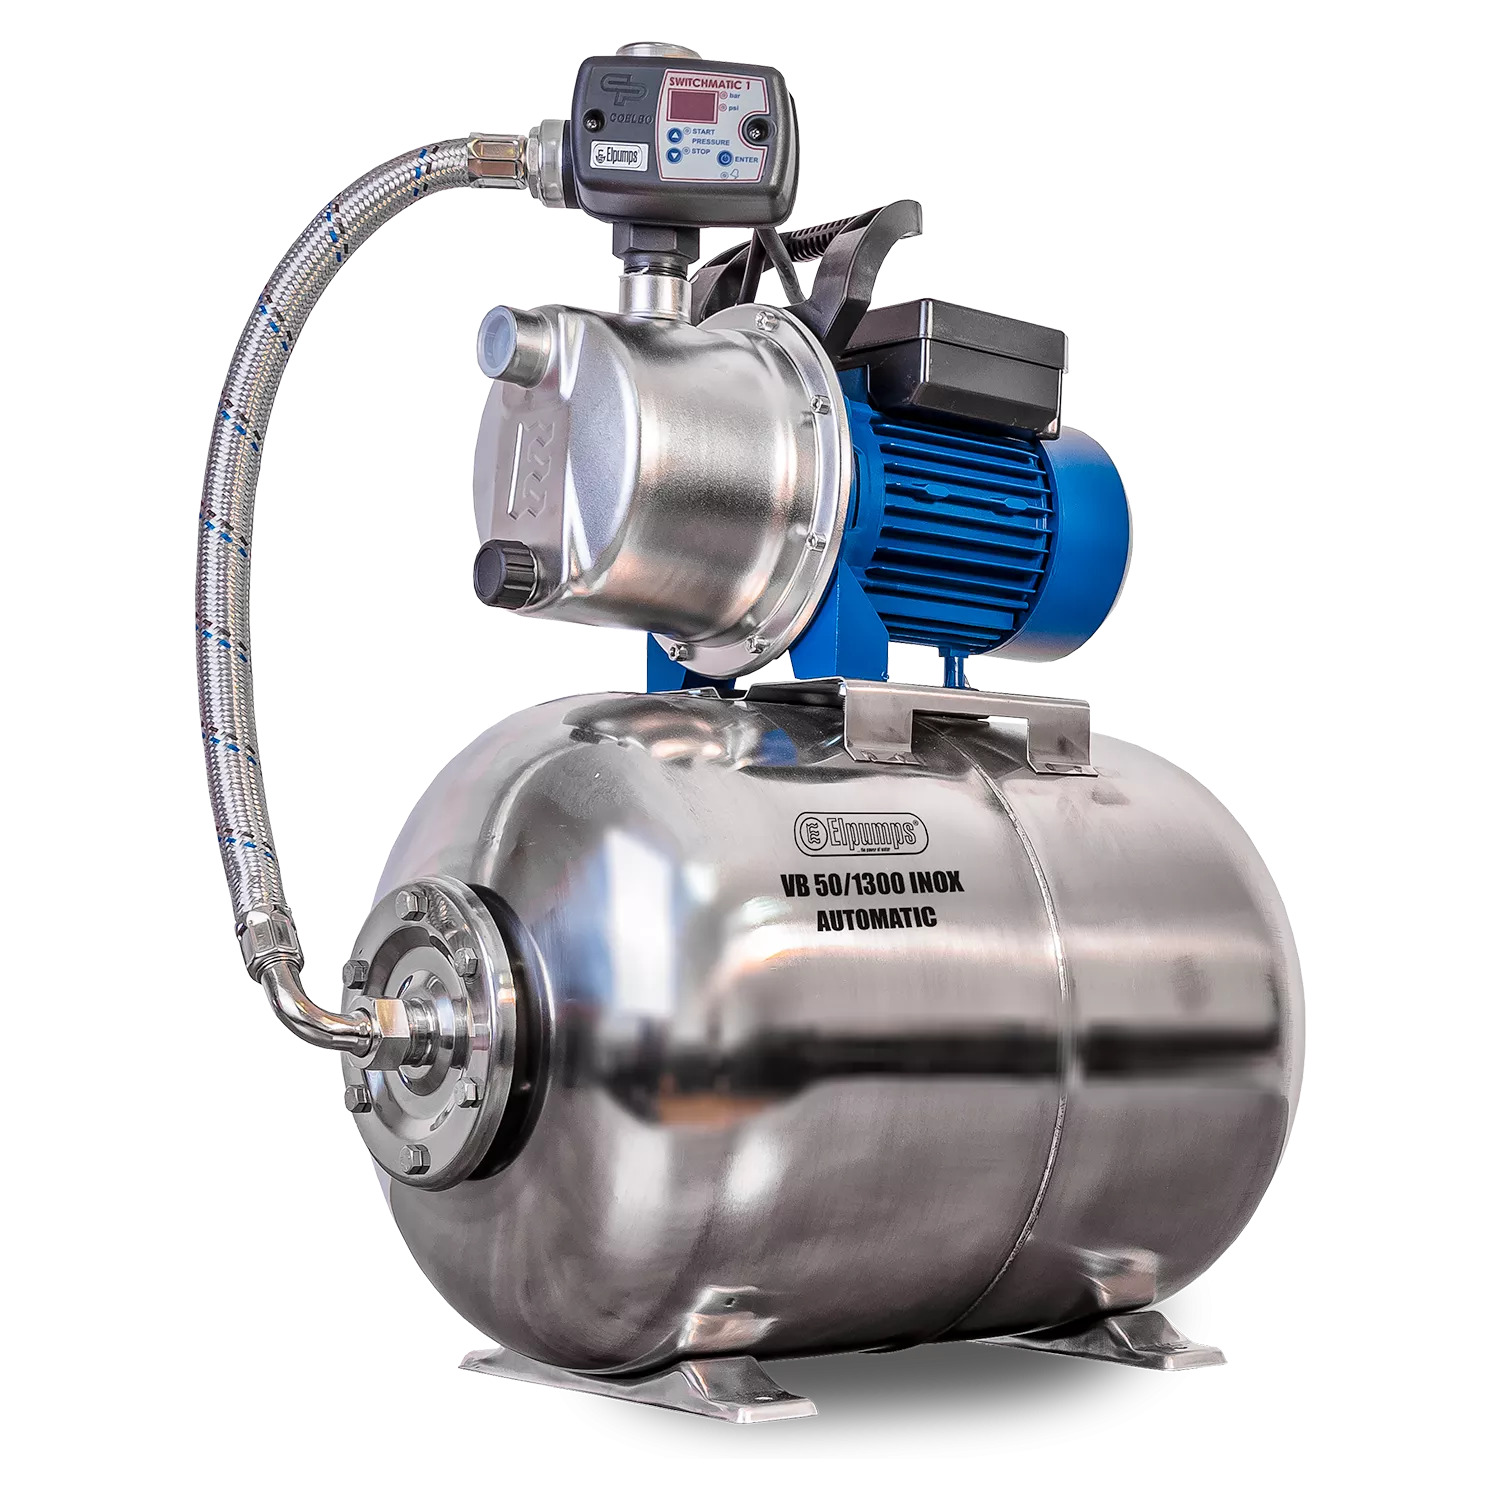 VB 50/1300 INOX Automatic Domestic Waterworks